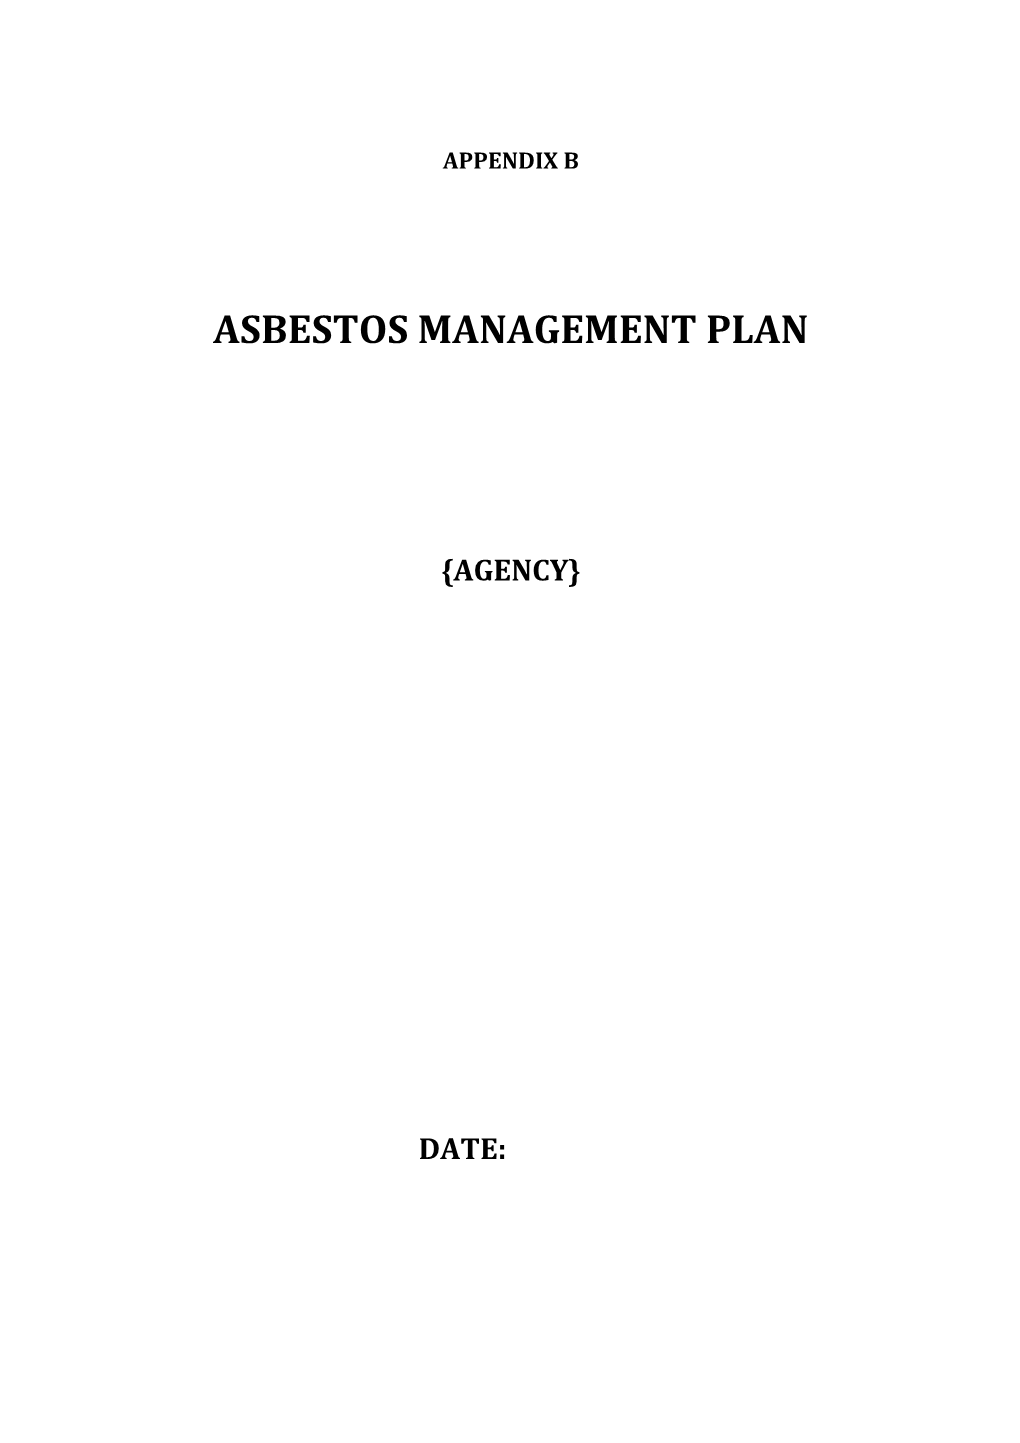 Asbestos Management Plan s1